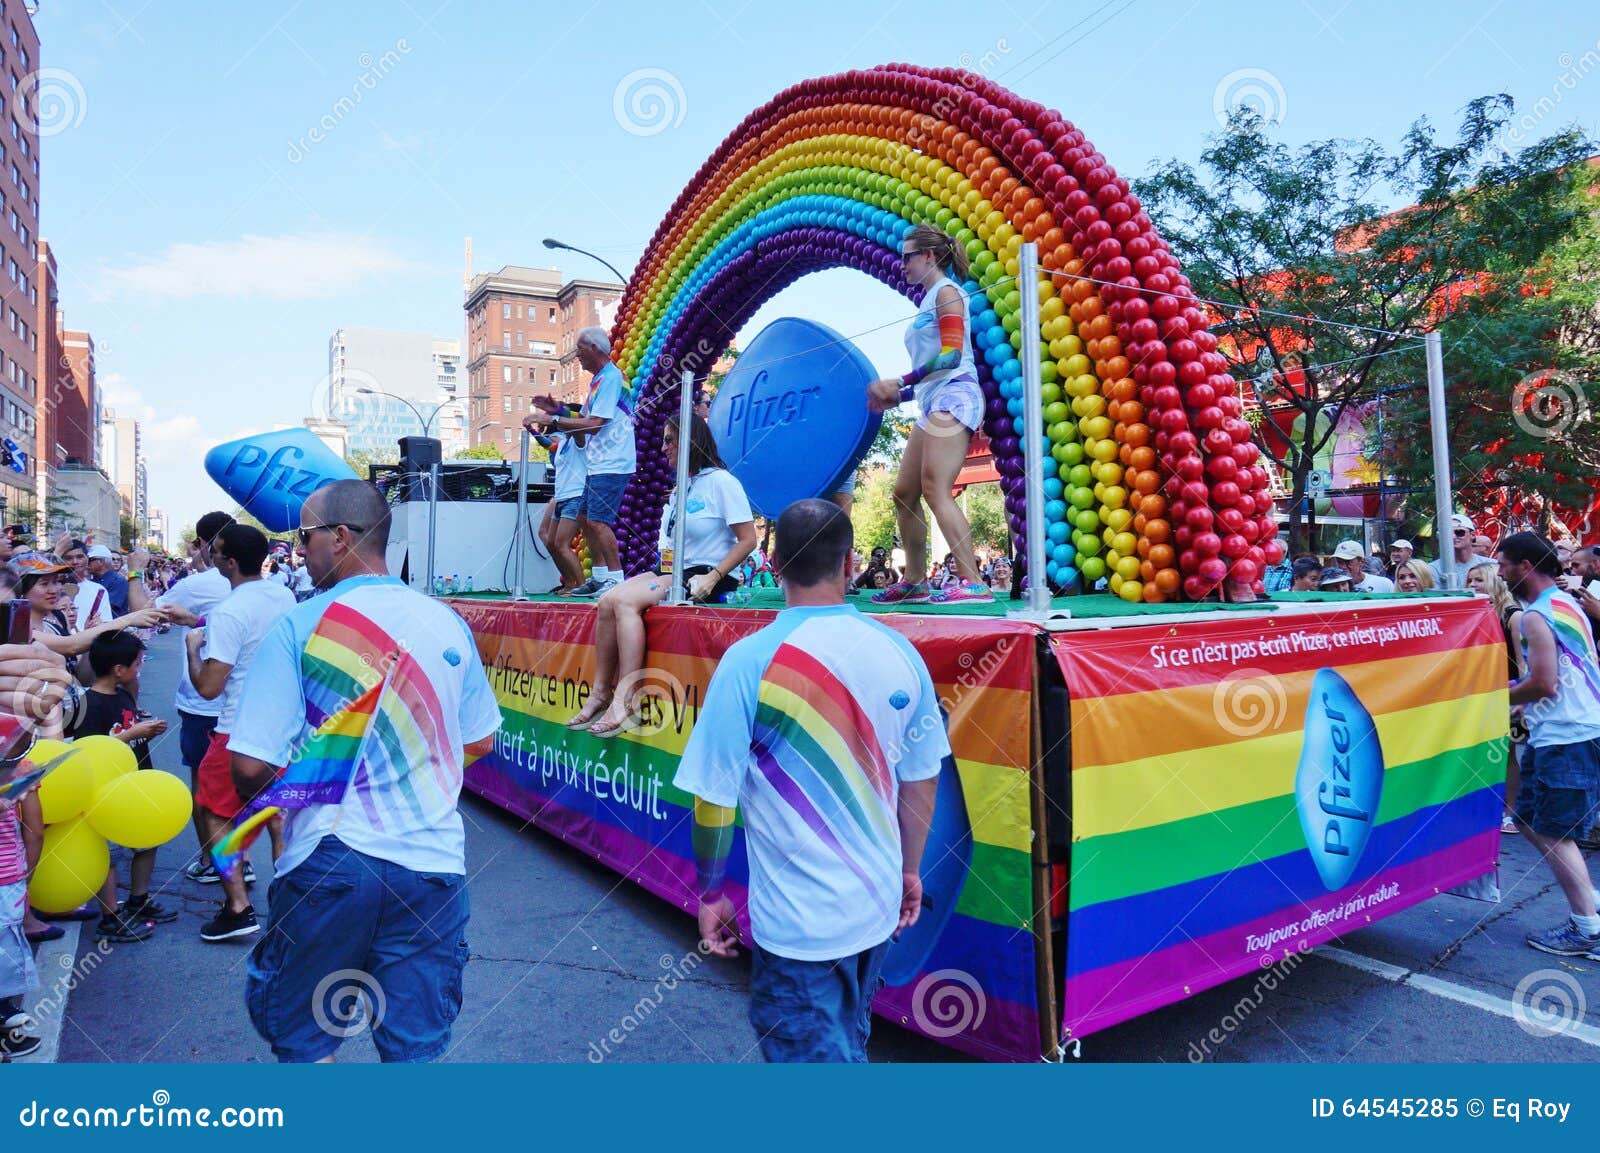 pfizer-pharmaceuticals-maker-viagra-fierte-montreal-gay-pride-parade-canada-official-sponsor-annual-64545285.jpg